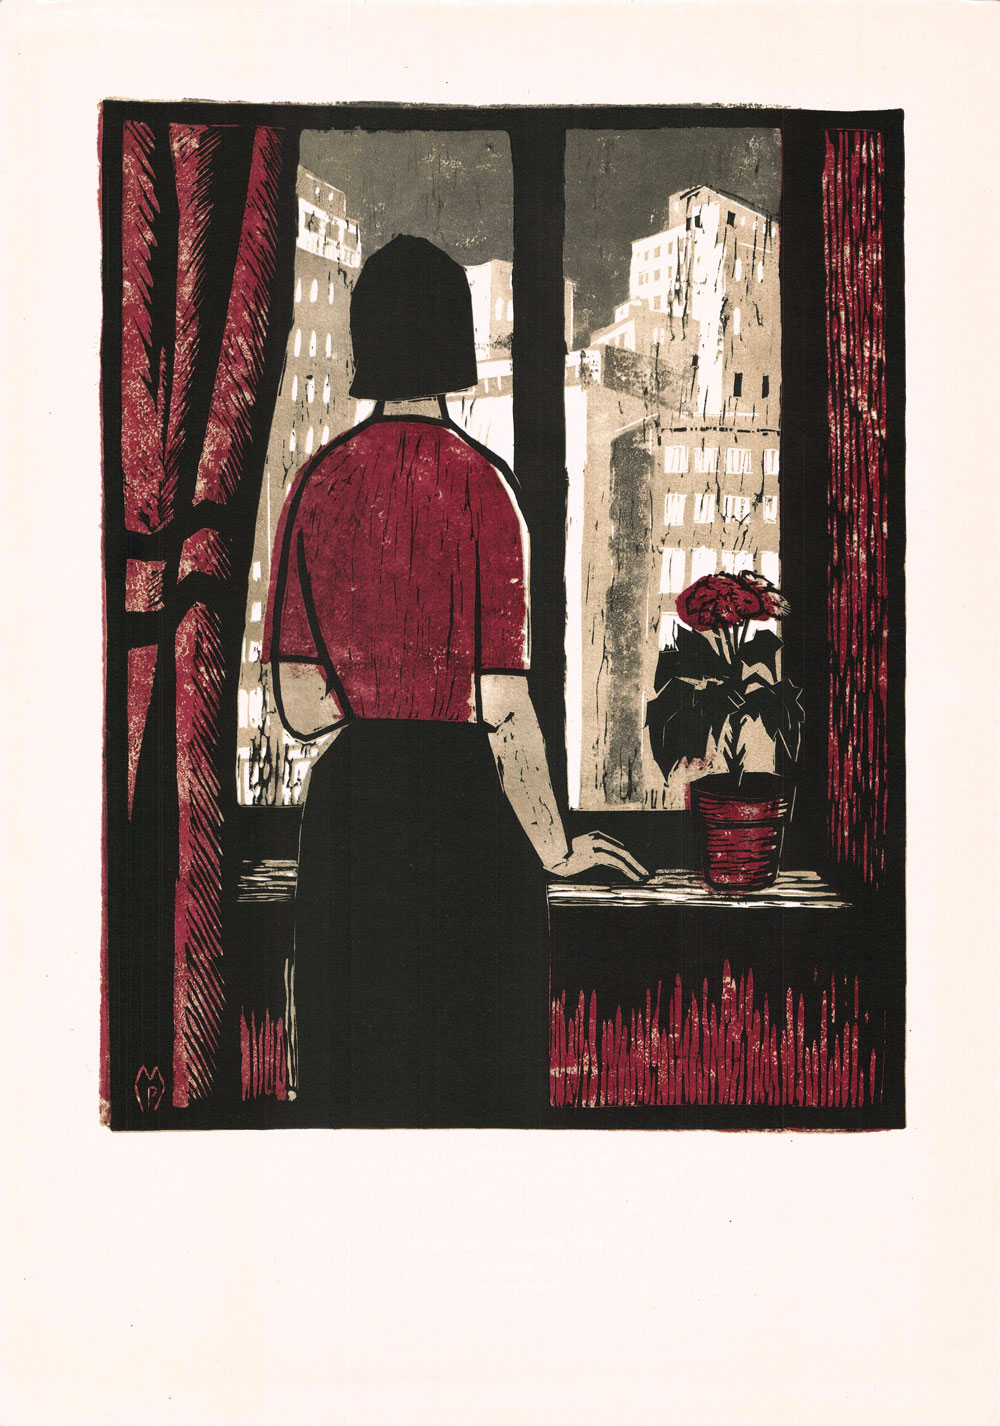 Puia Hortensia Masichevici, Blocuri noi, 1959, color linocut, 34Ã—48,5 cm